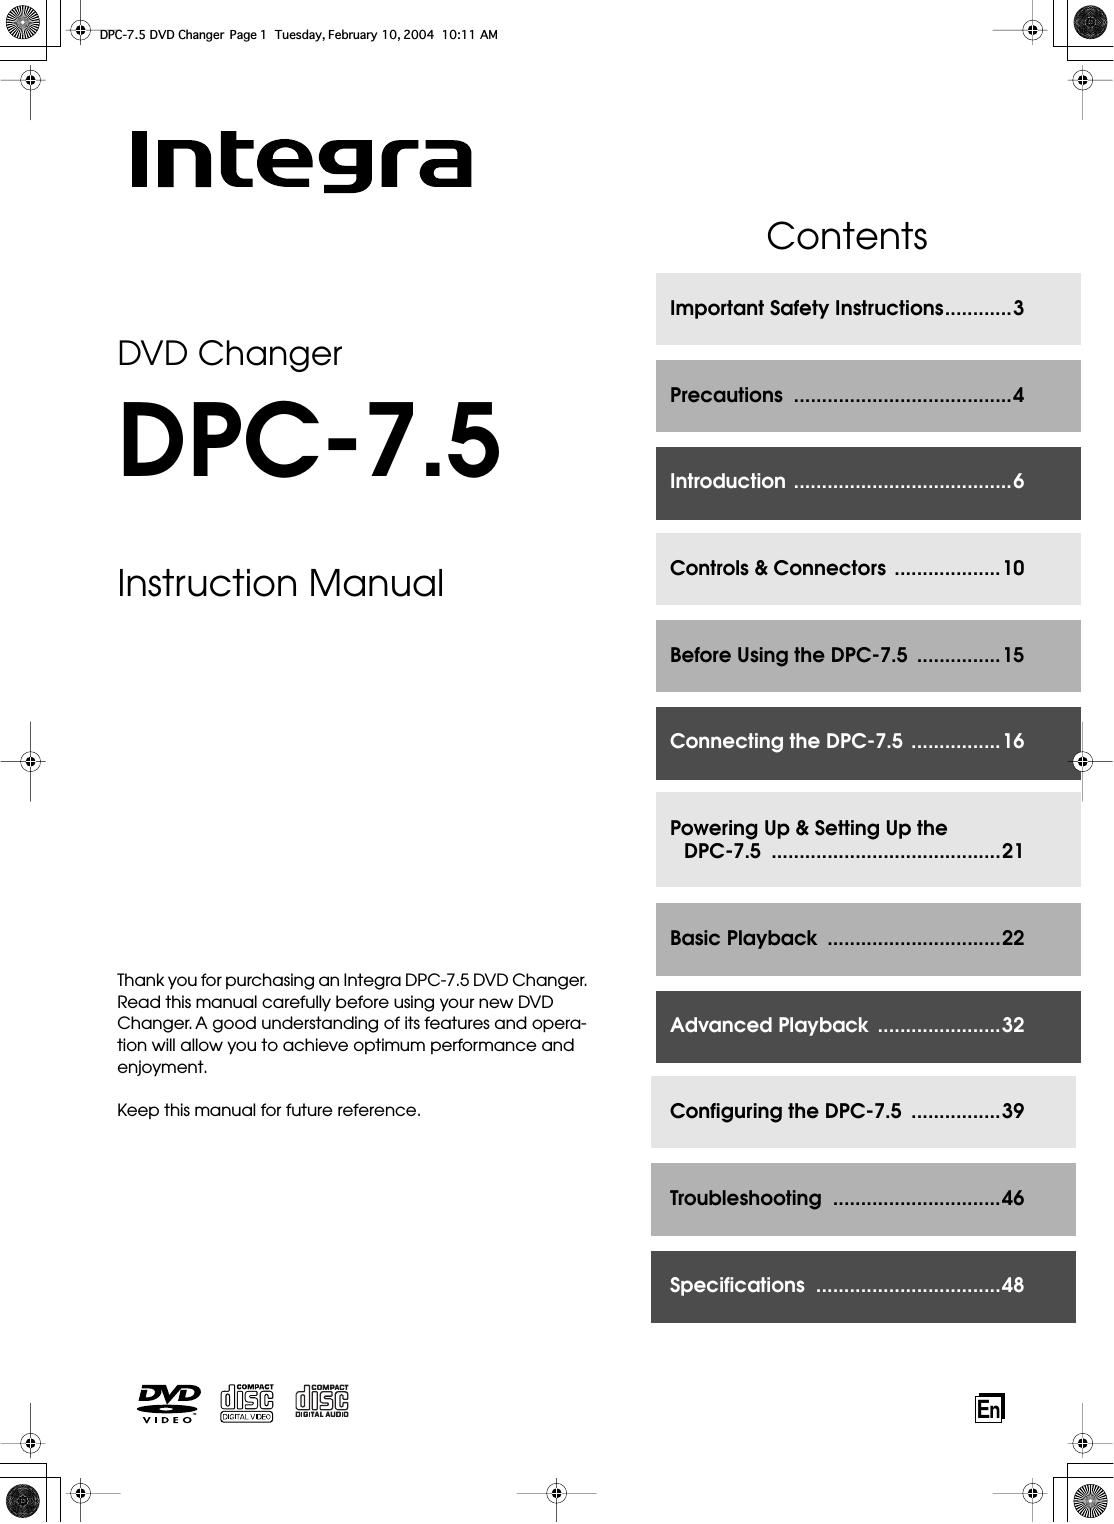 integra dpc 7 5 owners manual